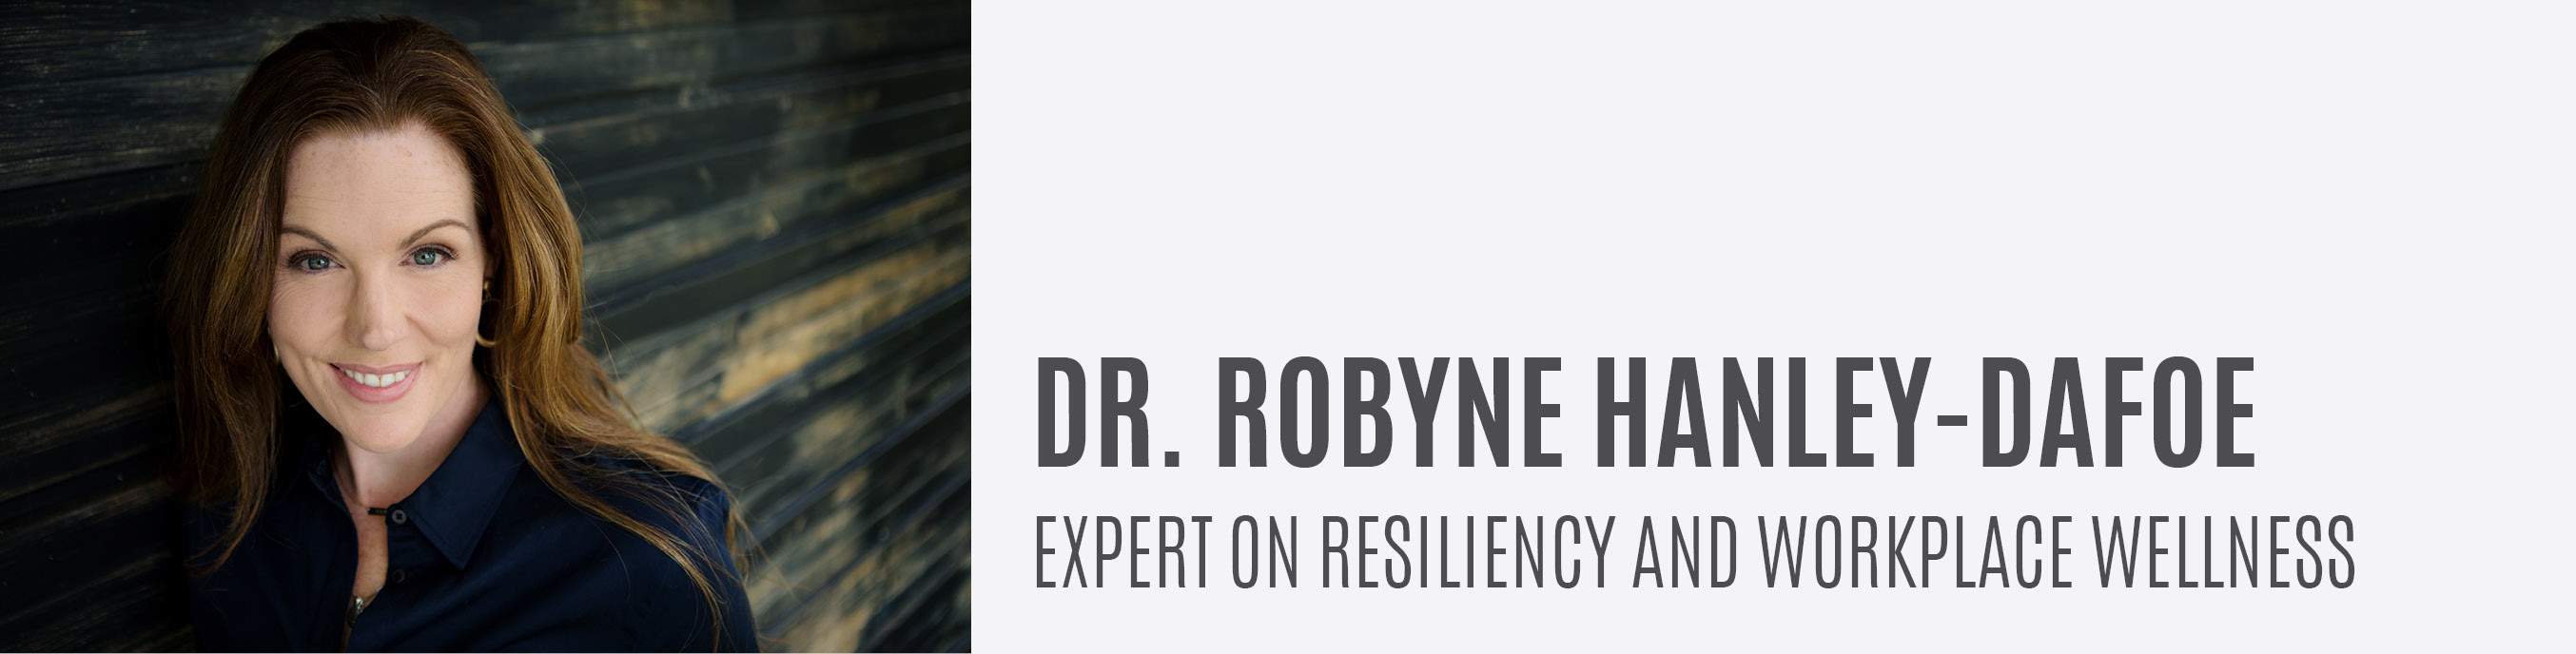 Dr. Robyne Hanley-Dafoe